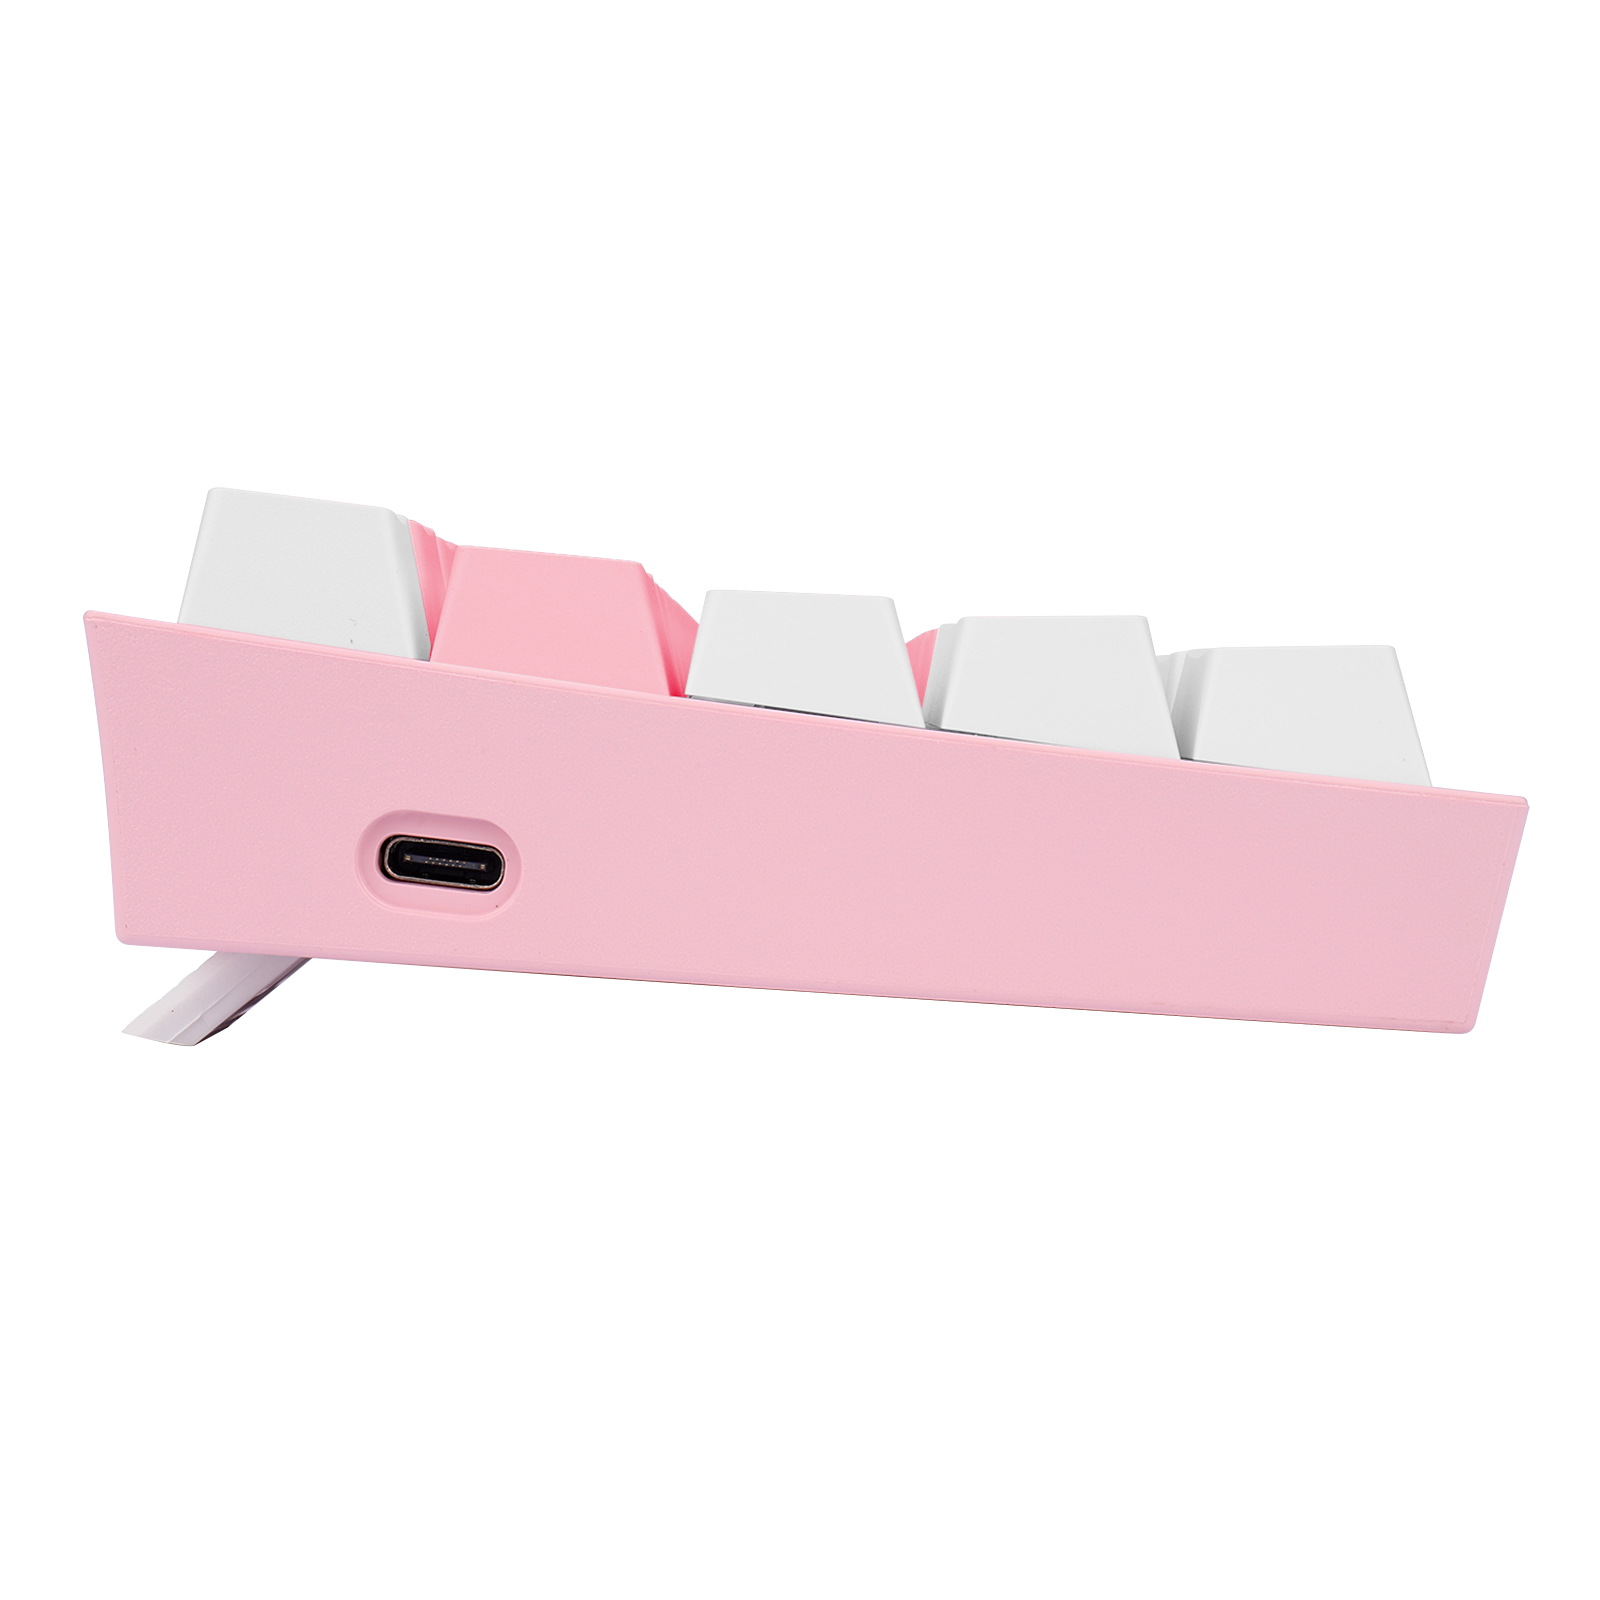 Teclado Redragon K616 RGB Fizz Pro Pink / White Mecanico